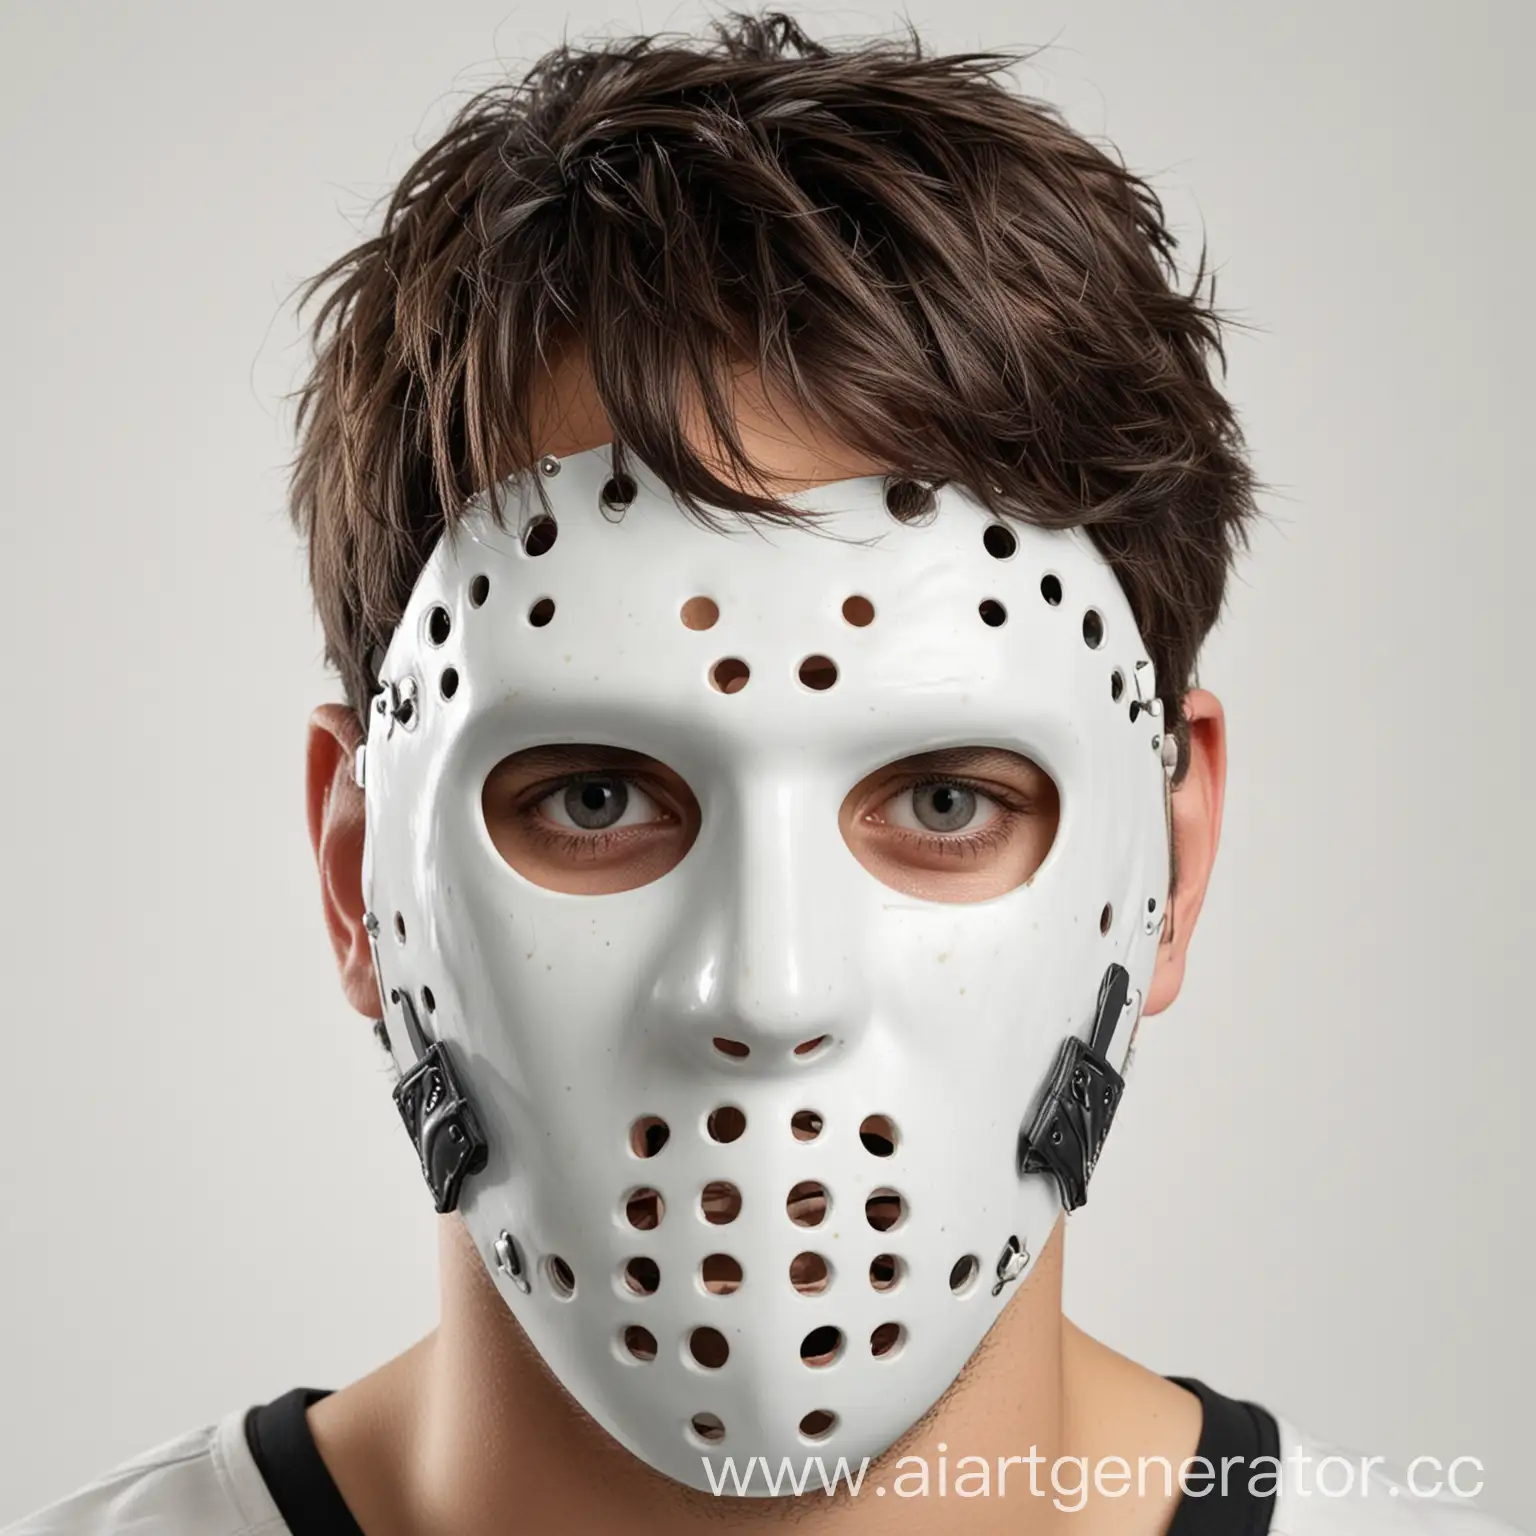 Person-Wearing-Hockey-Mask-on-White-Background